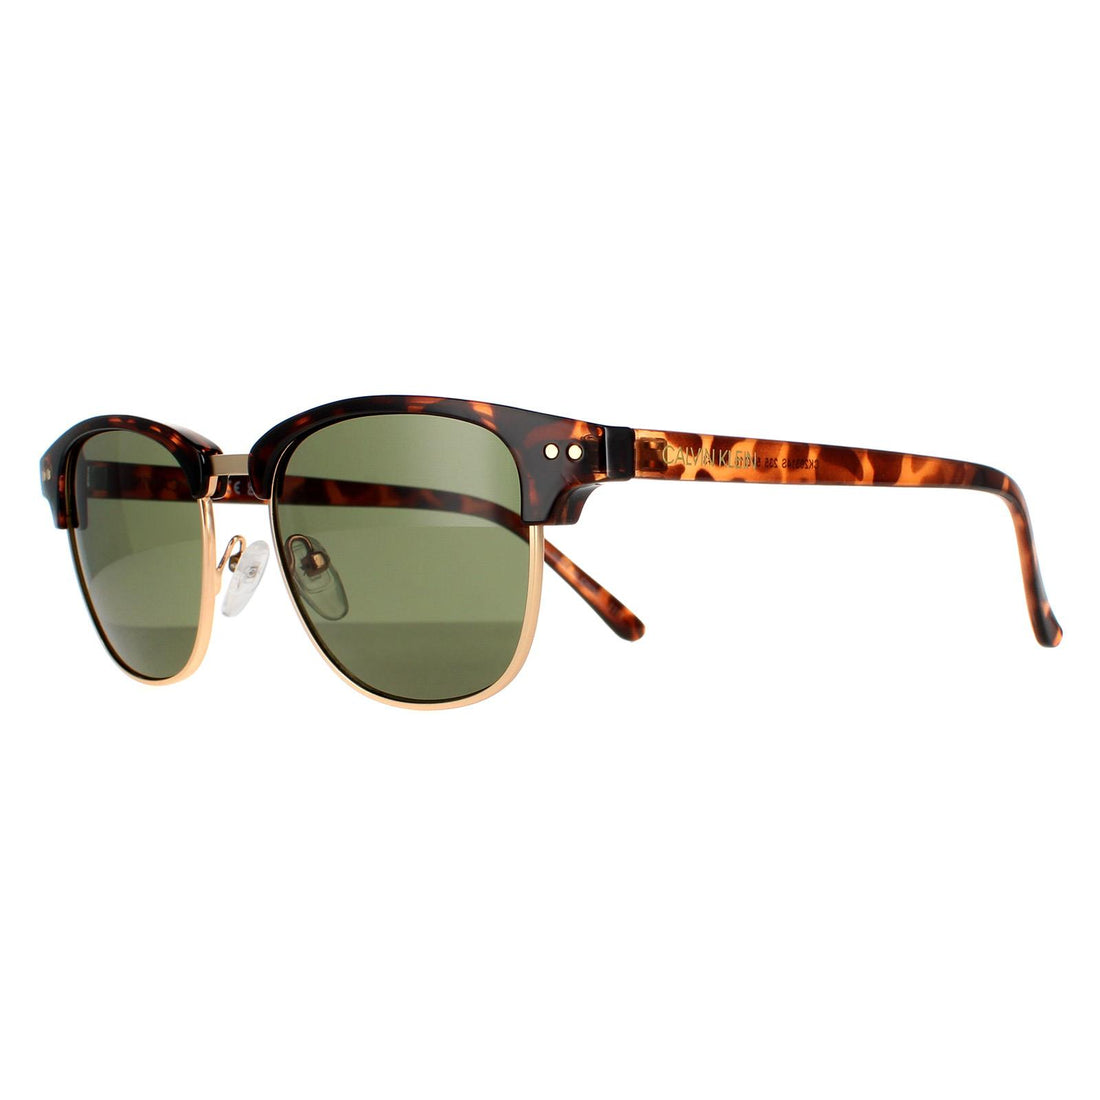 Calvin Klein Sunglasses CK20314S 235 Shiny Tortoise Solid Green G15